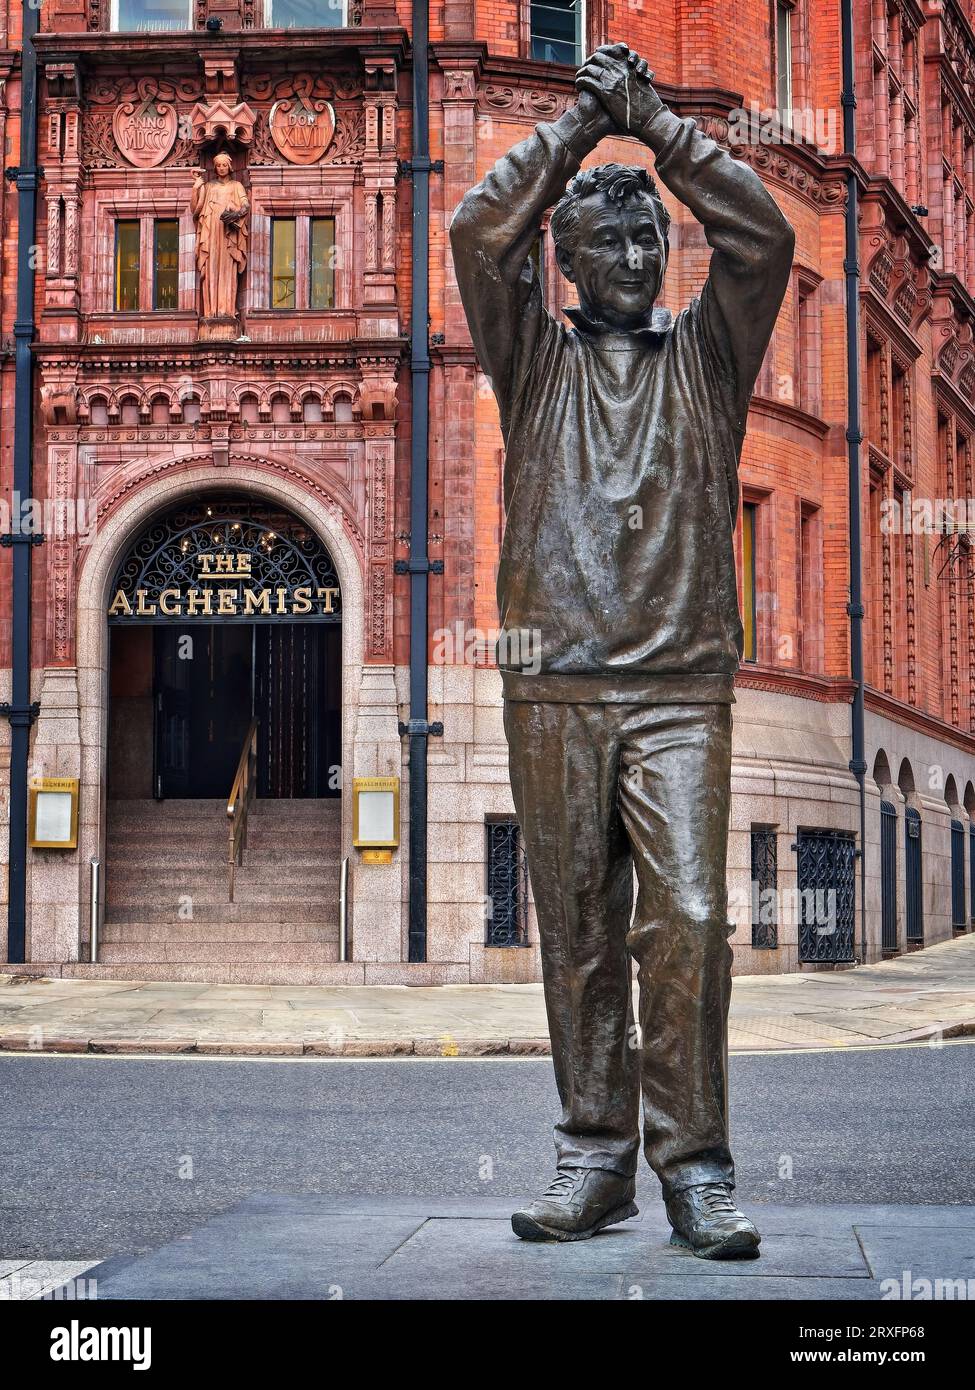 Großbritannien, Nottingham, King Street, Brian Clough Statue Stockfoto